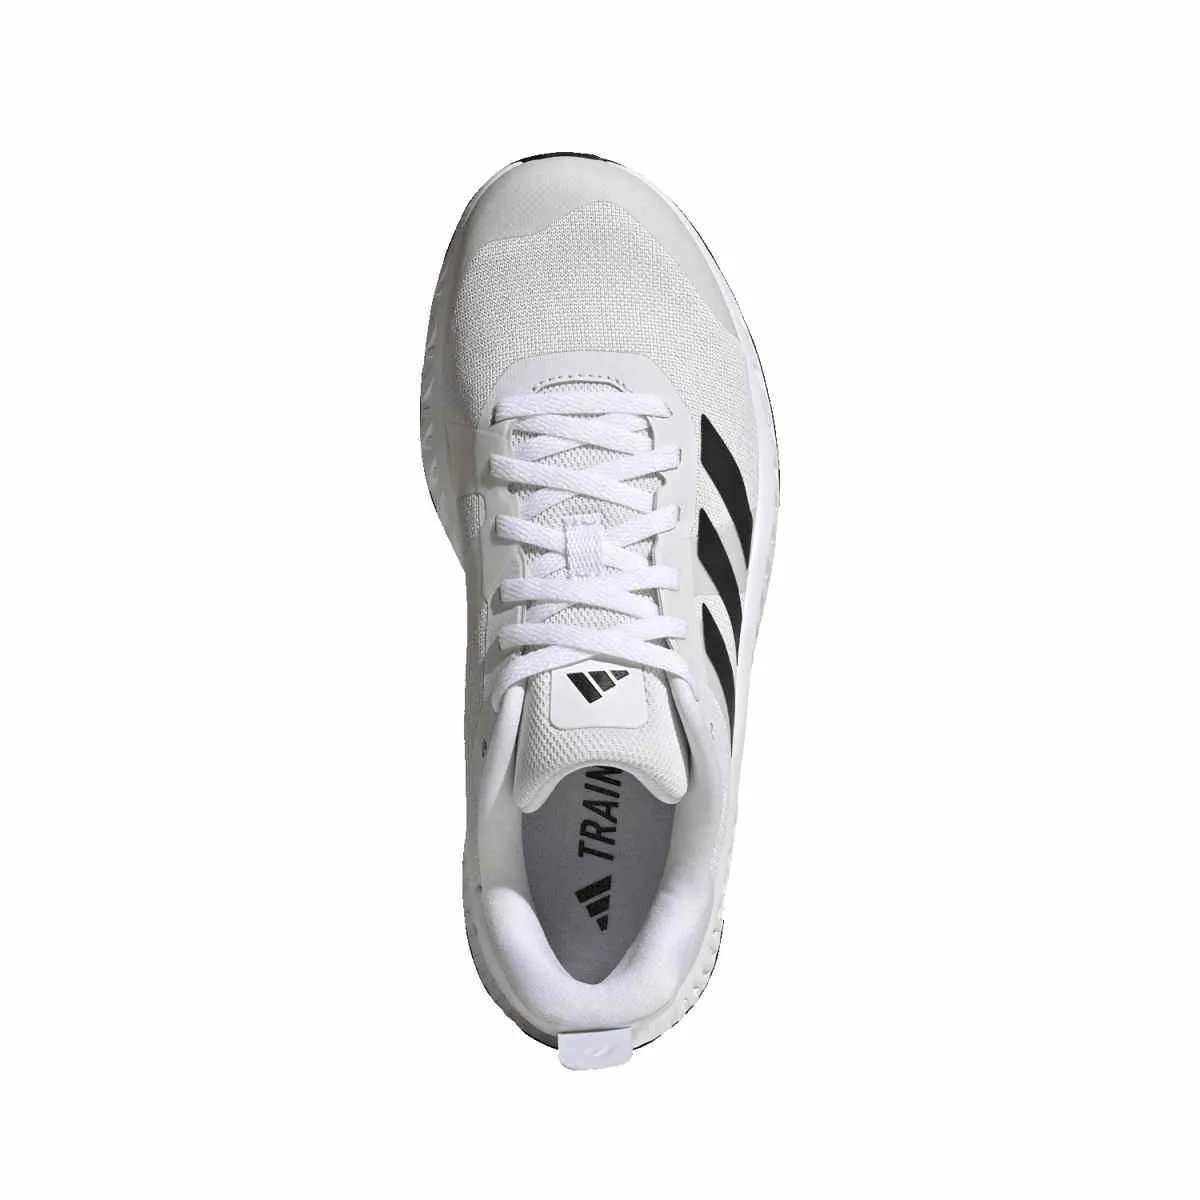 adidas shoes EVERYSET TRAINER W, white/black/grey